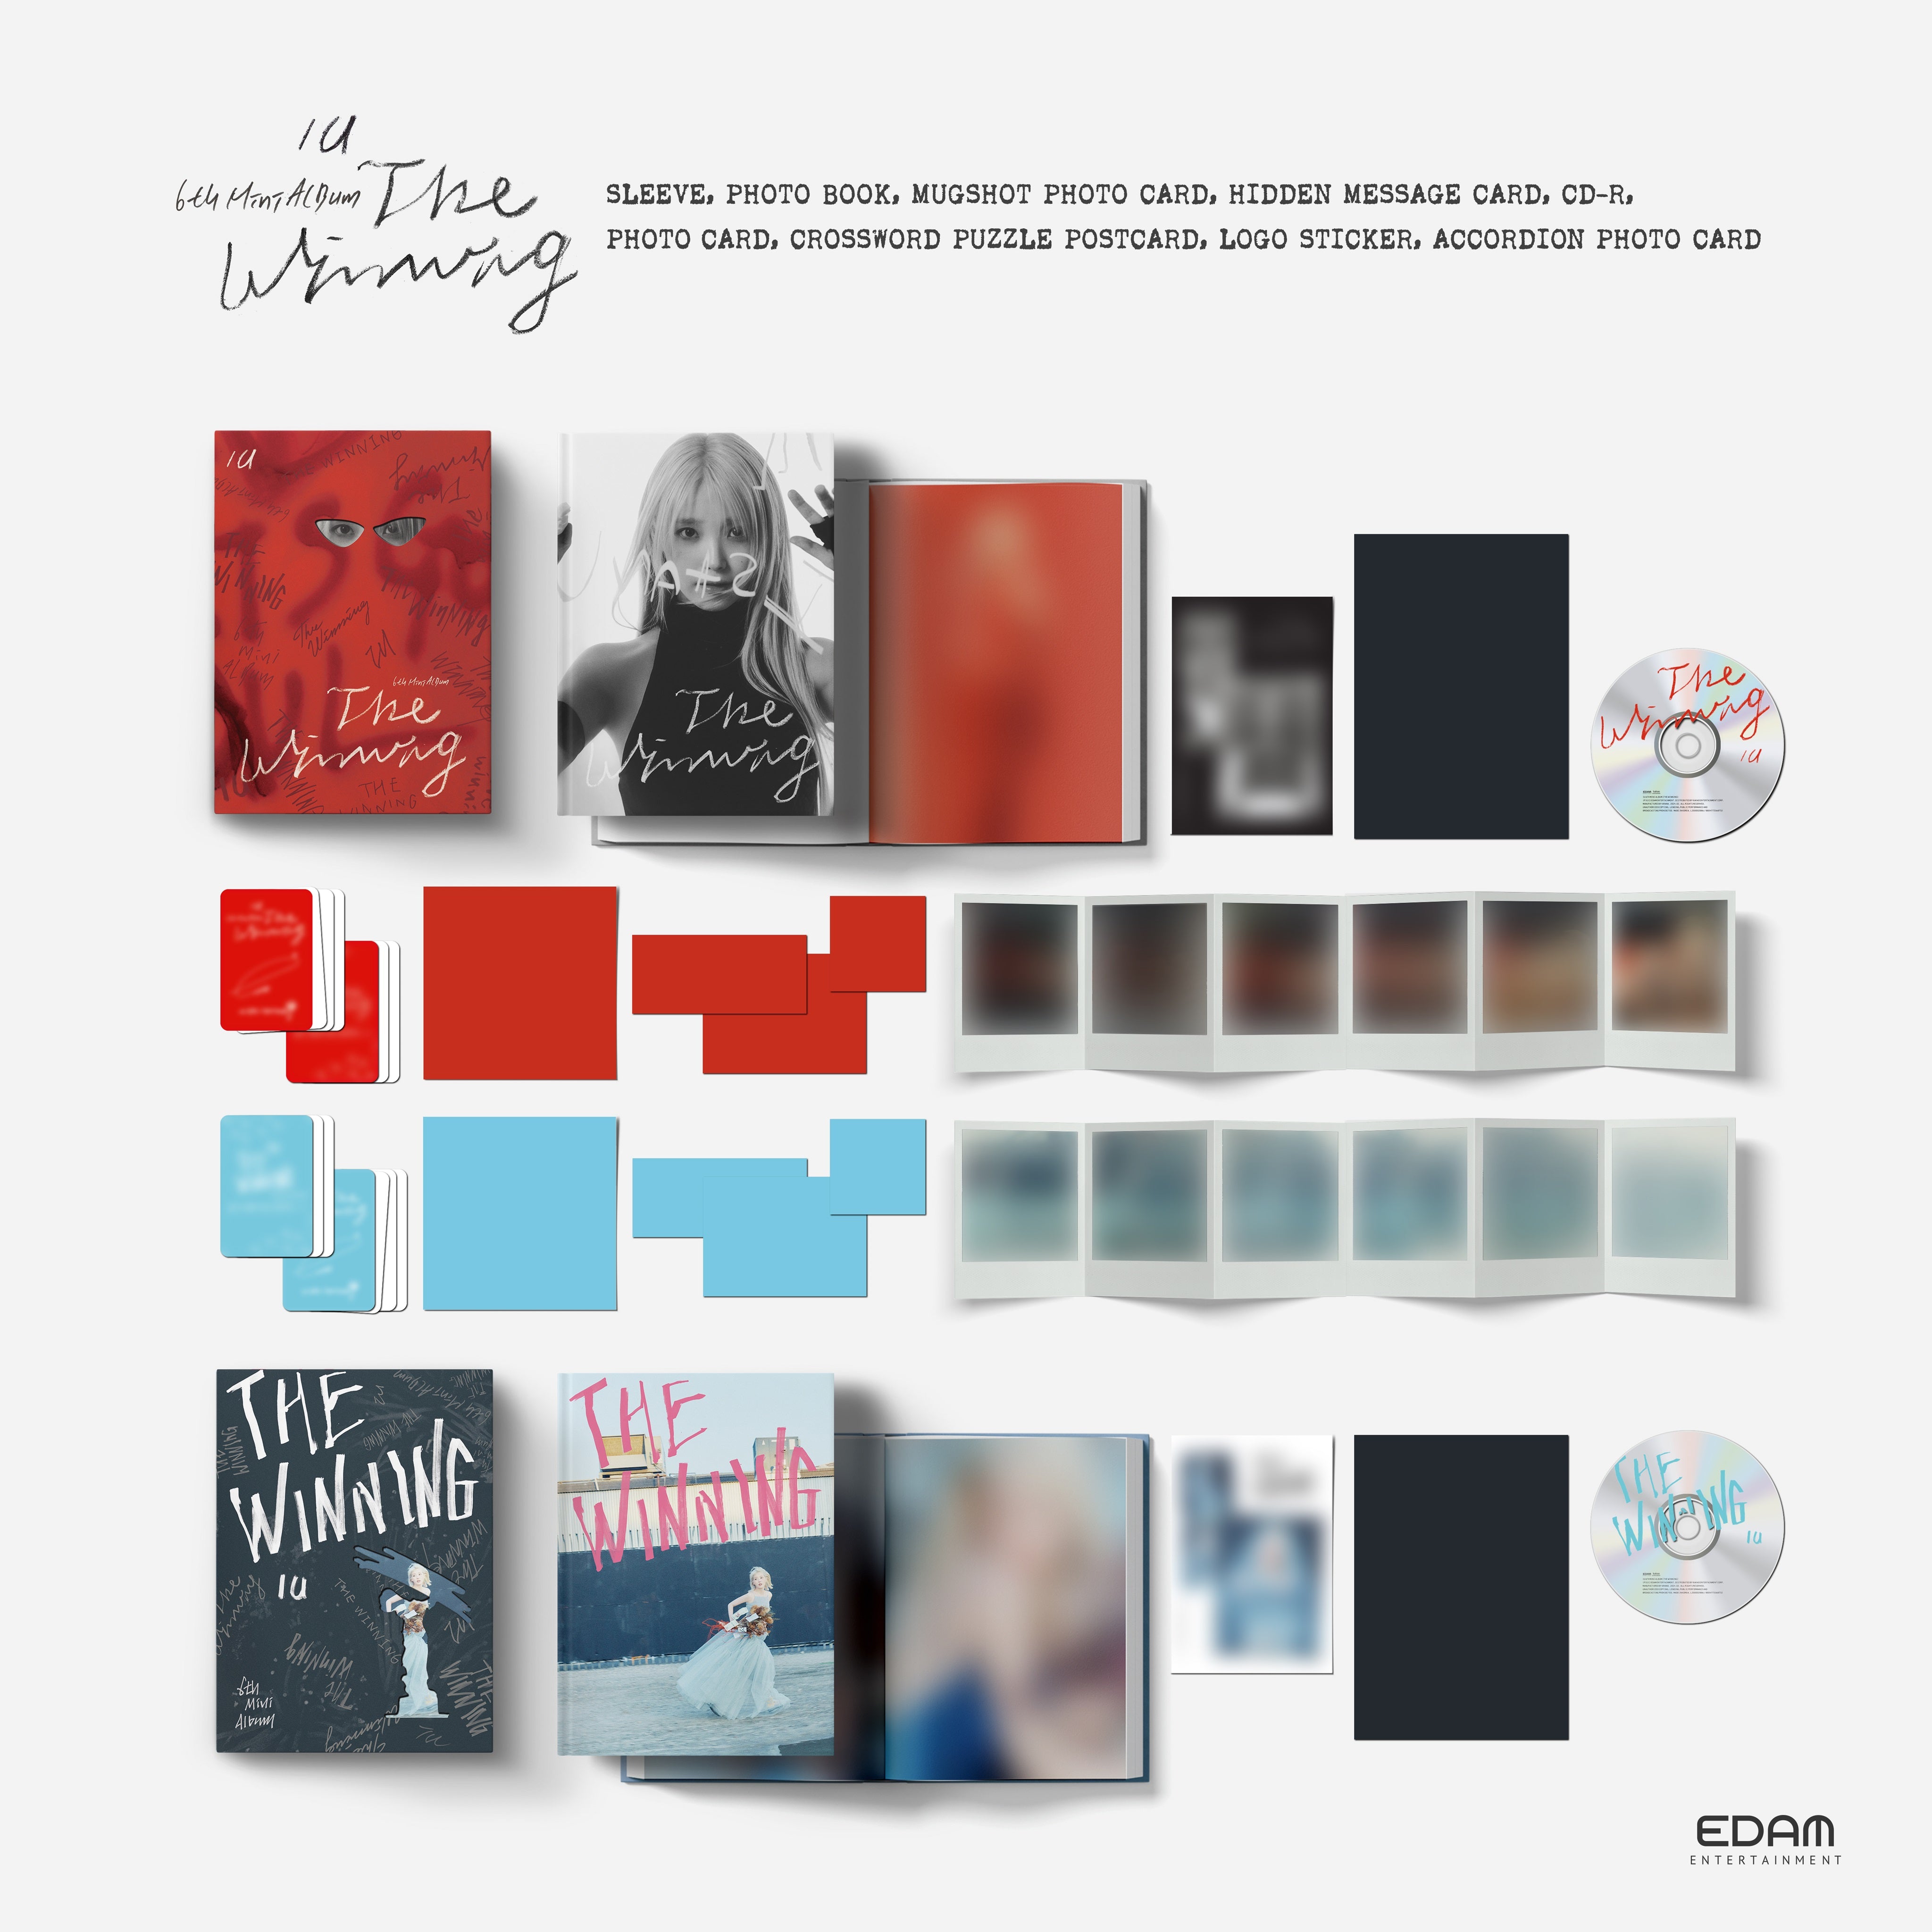 IU Mini Album Vol. 6 – The Winning (Random)